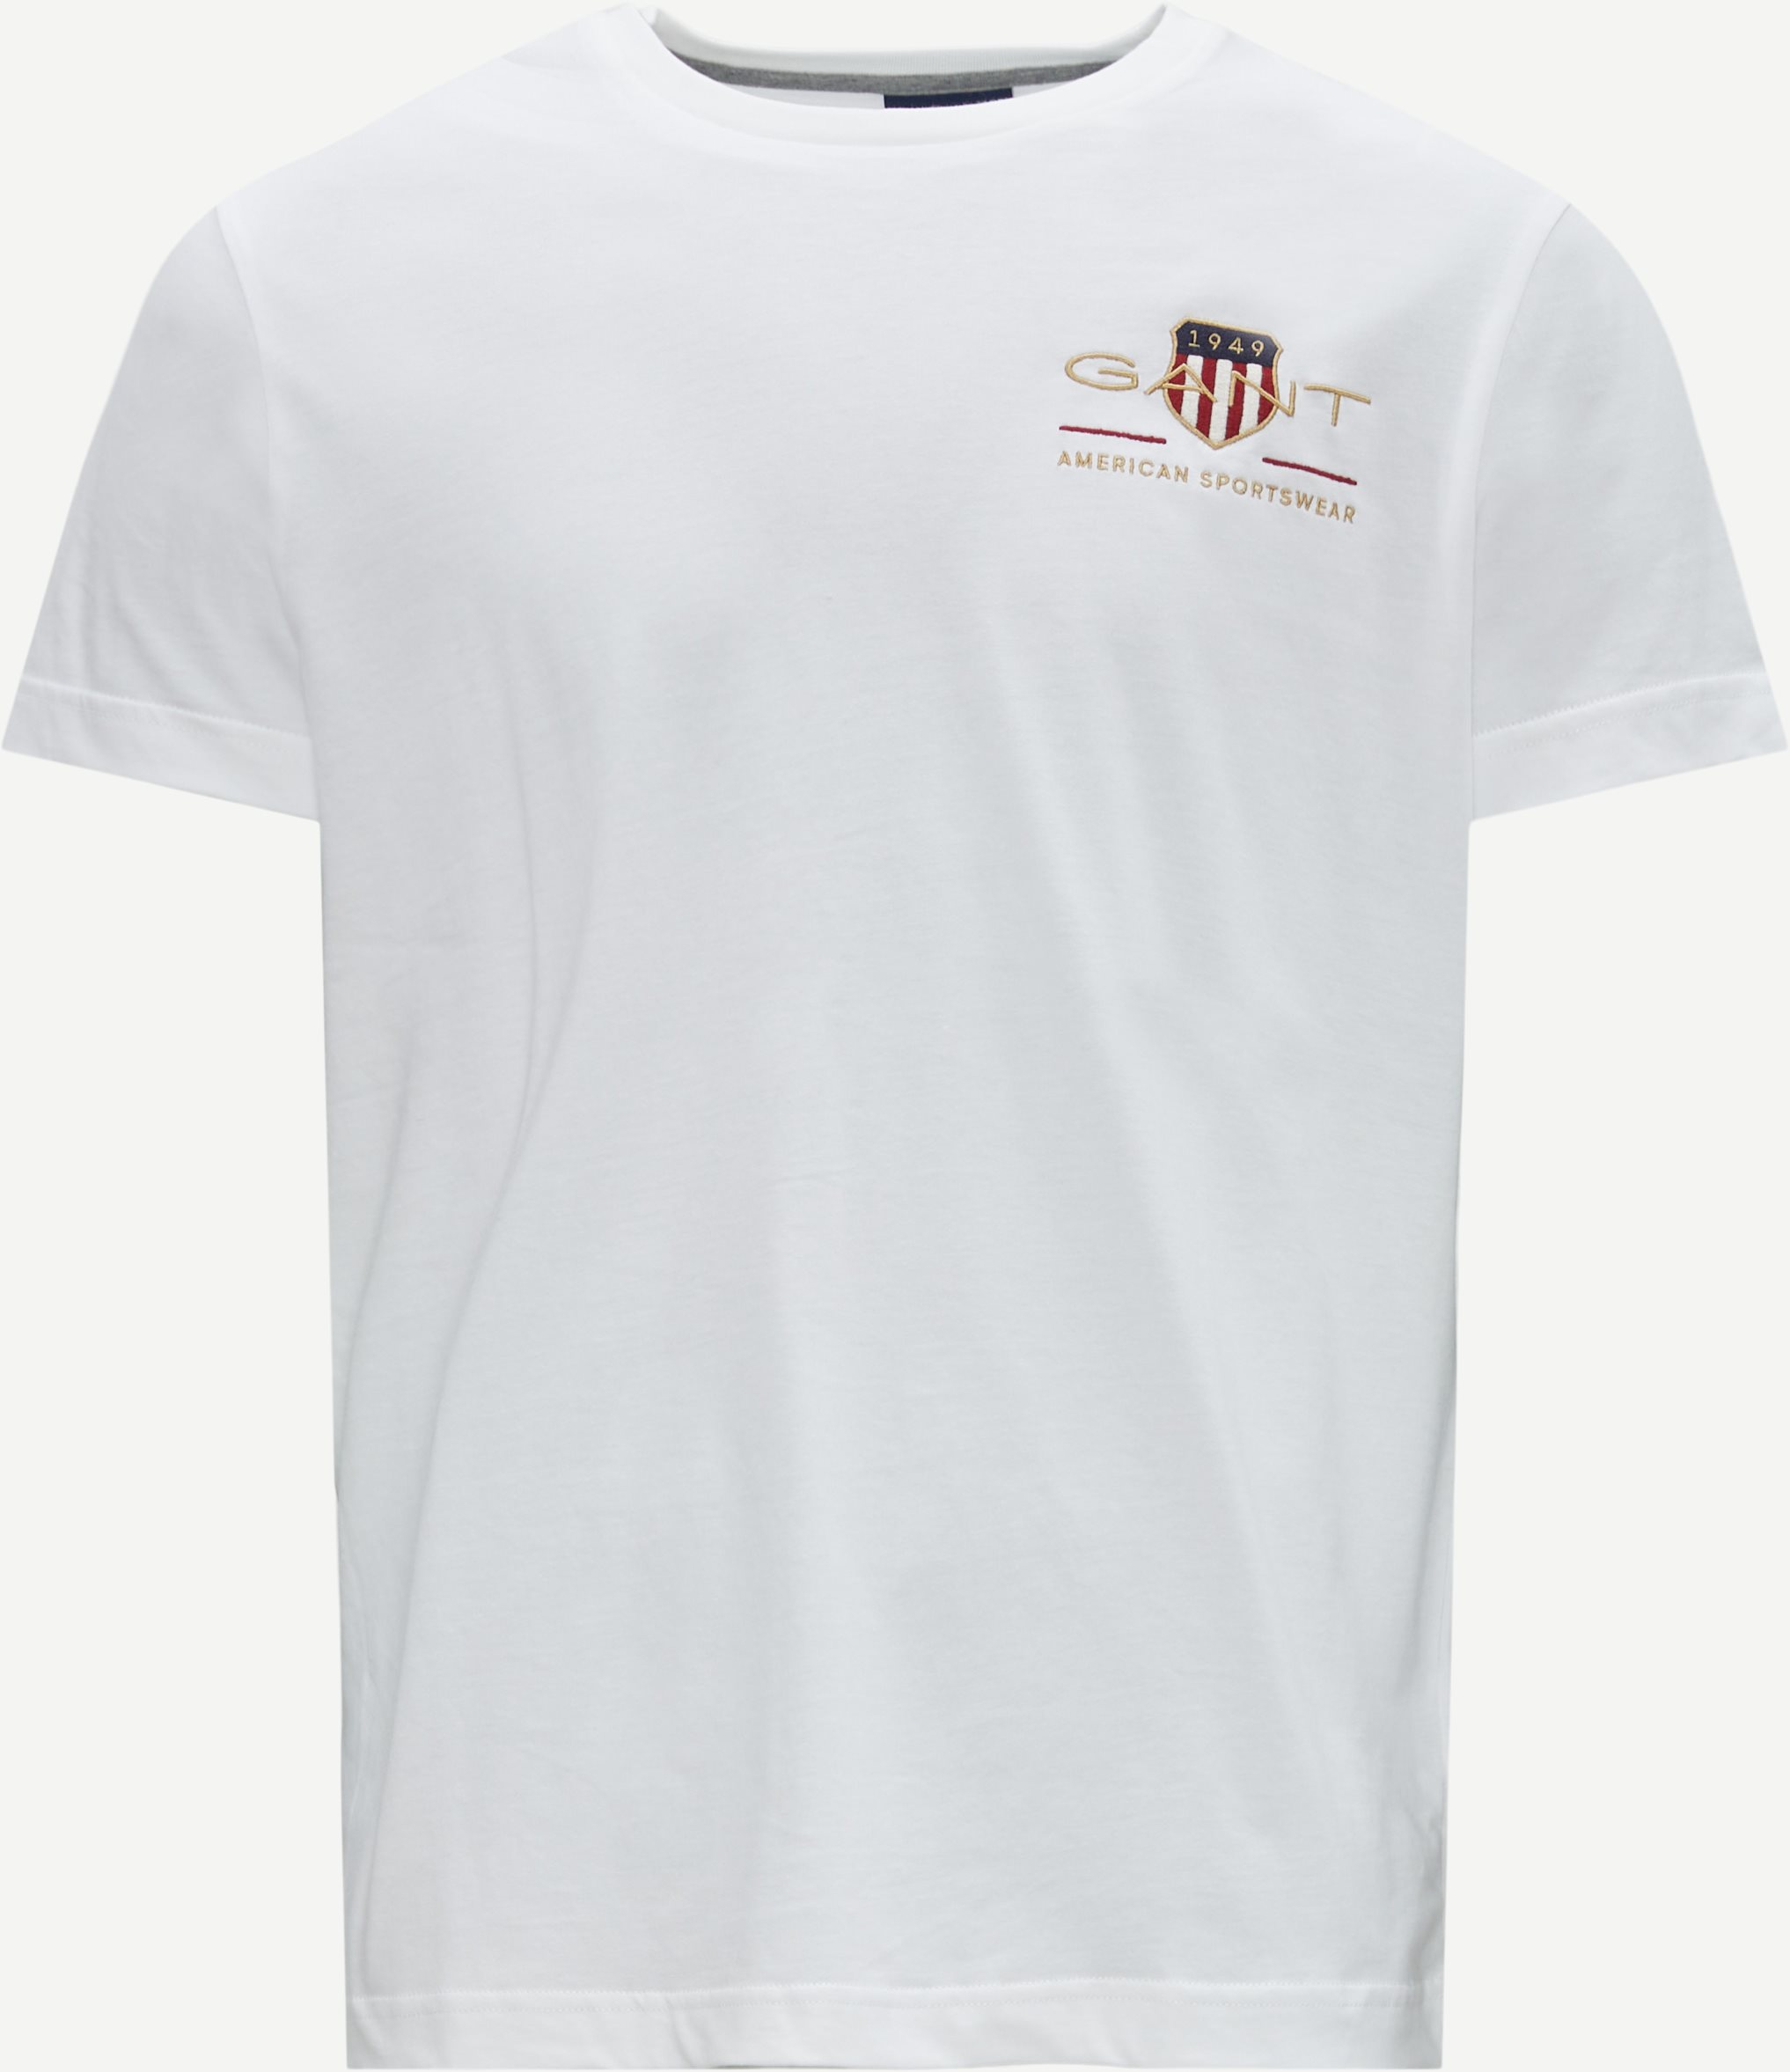 Gant T-shirts ARCHIVE SHIELD EMB SS T-SHIRT 2003081 Vit